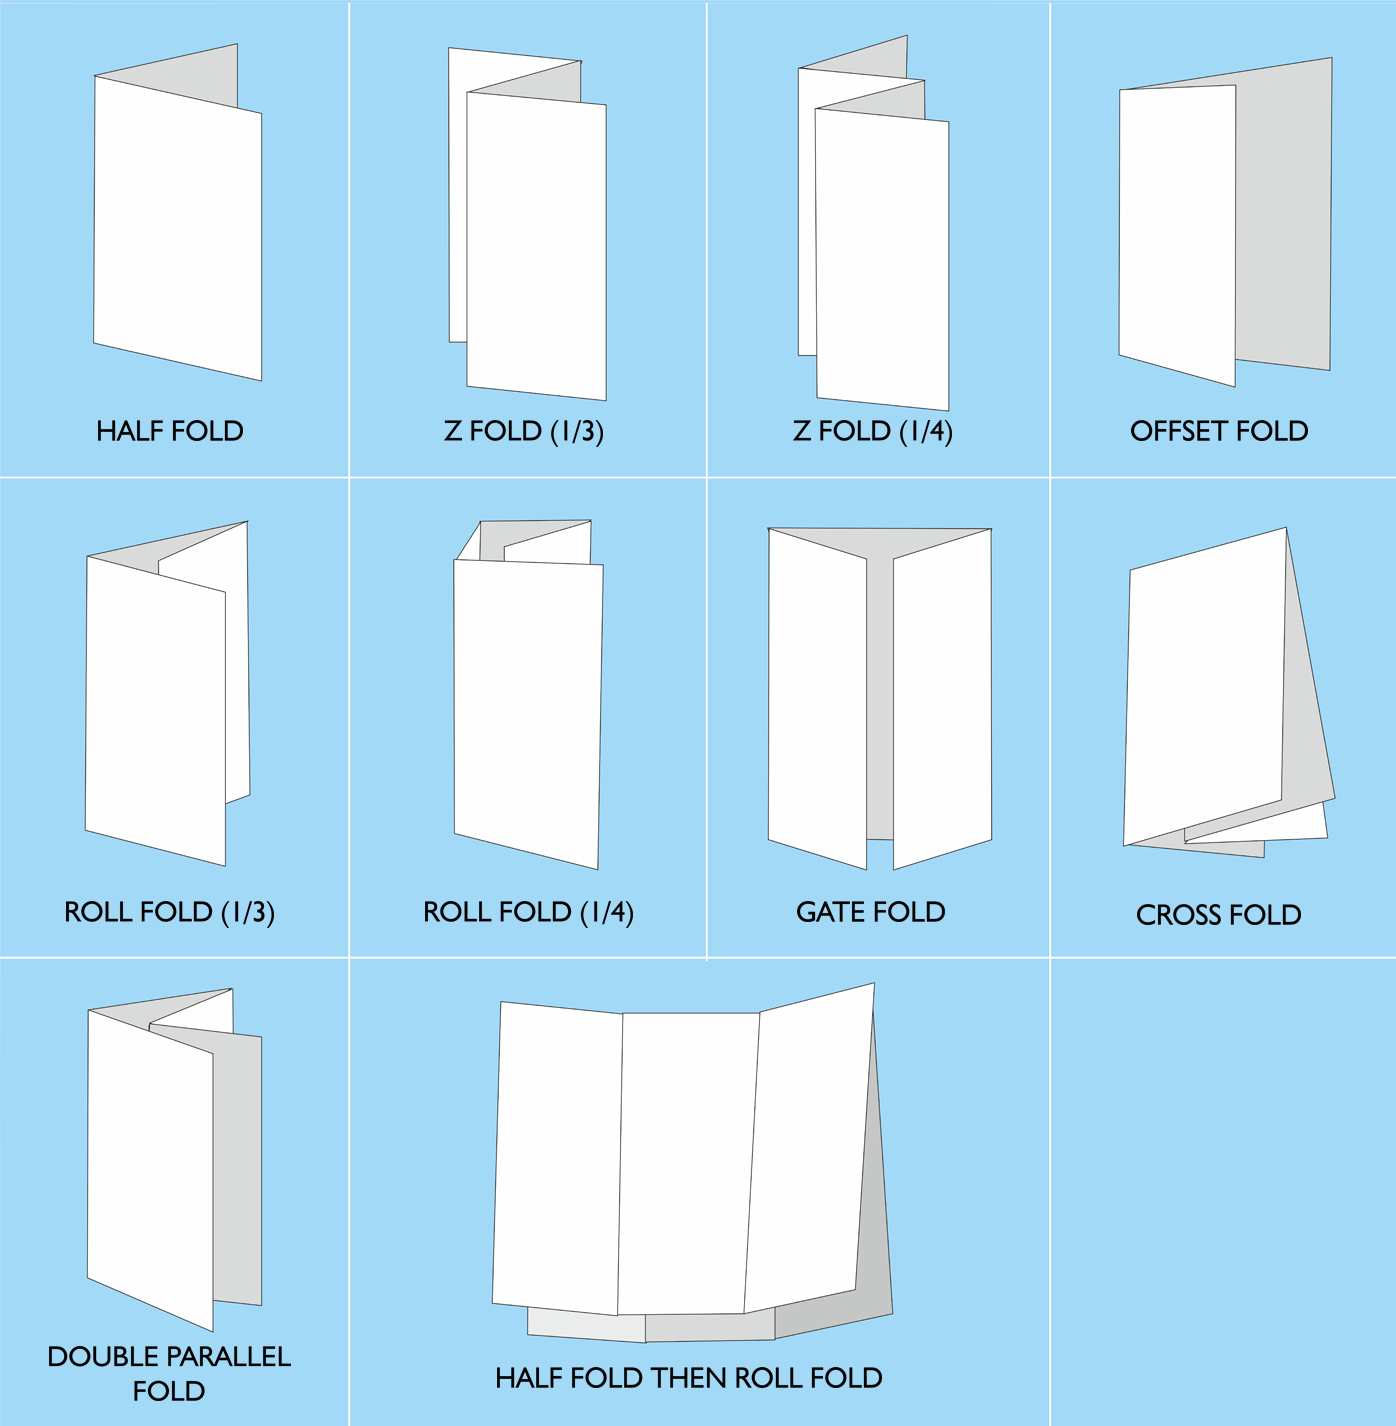 Folding types